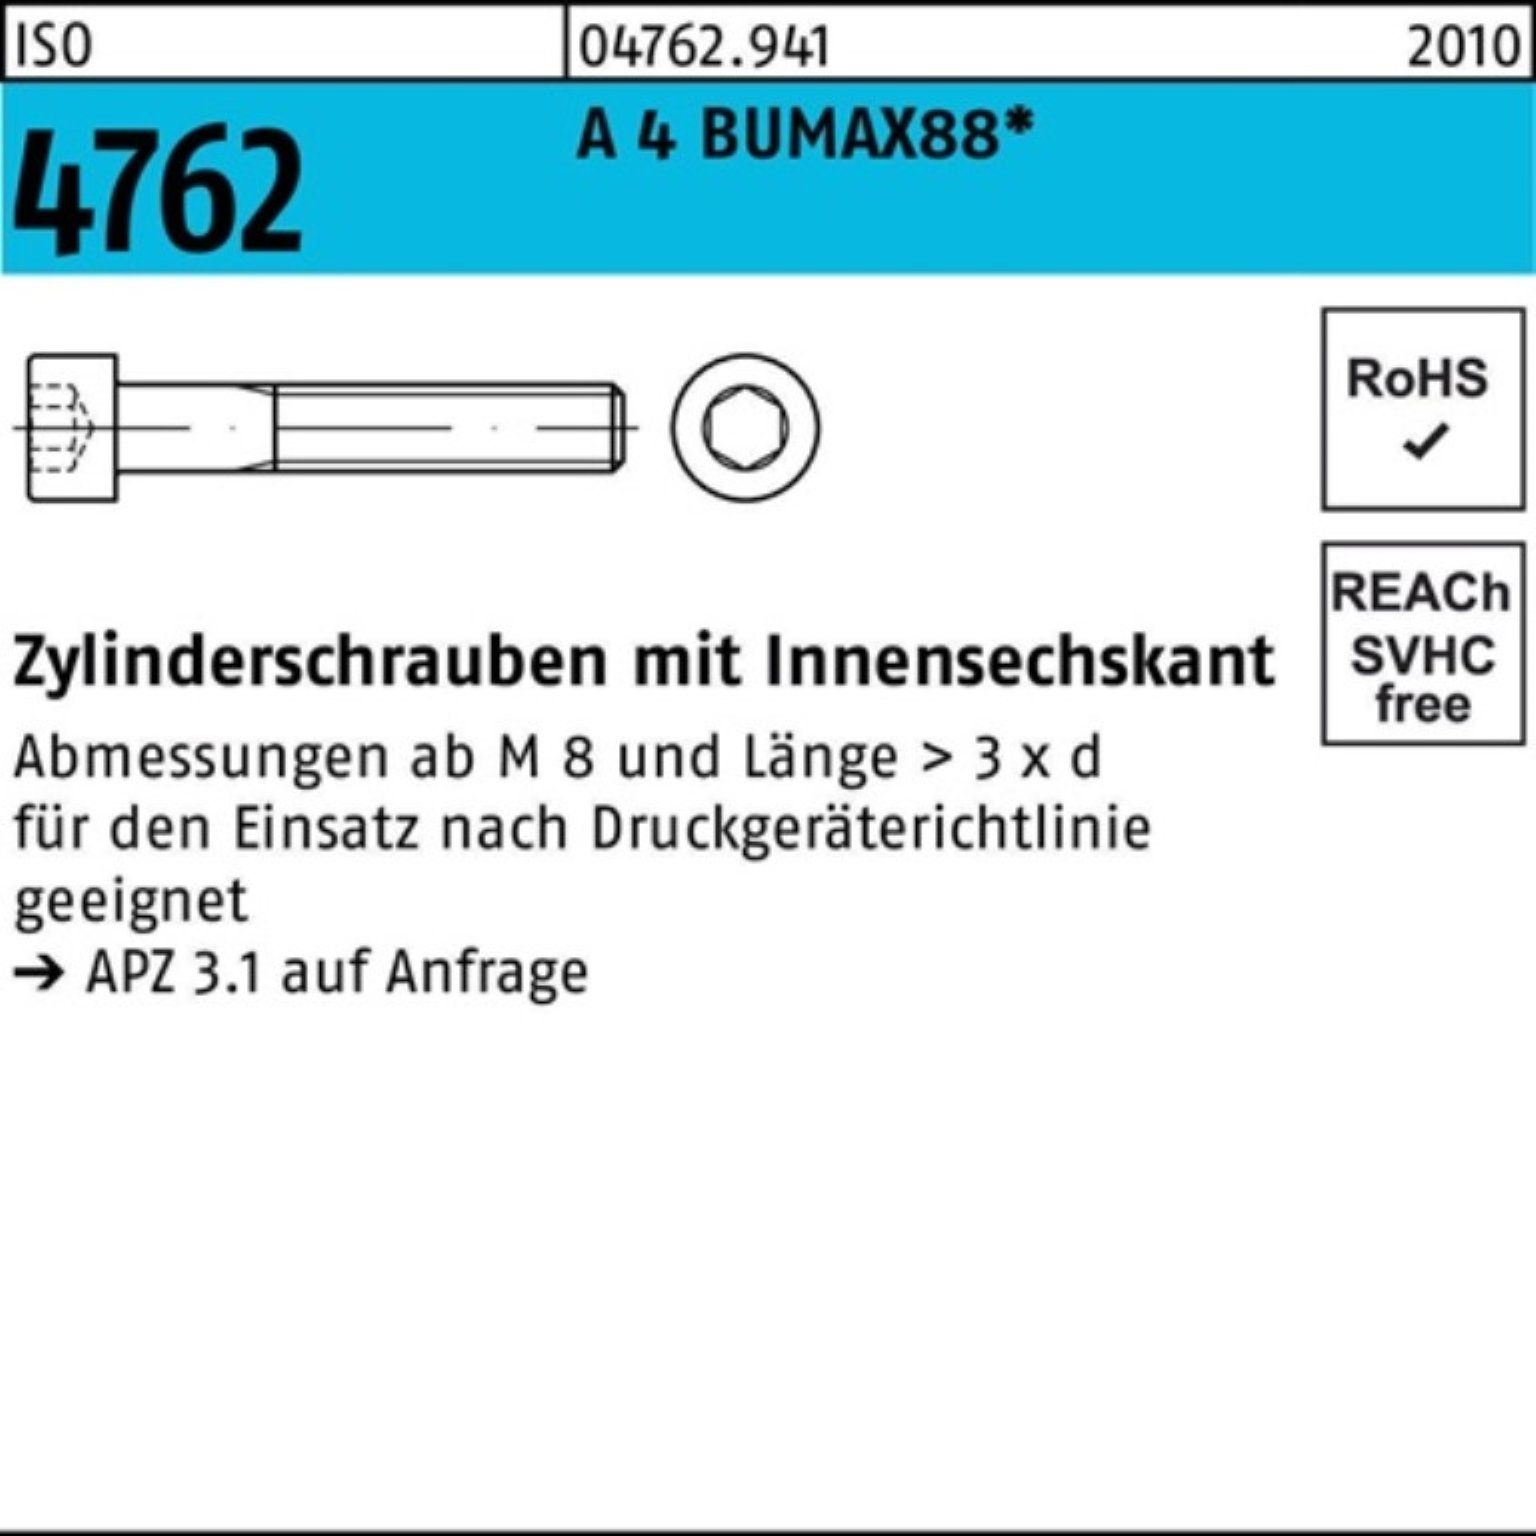 Pack 60 4762 Zylinderschraube A Bufab M12x ISO 25 BUMAX88 Zylinderschraube 4 Innen-6kt 100er